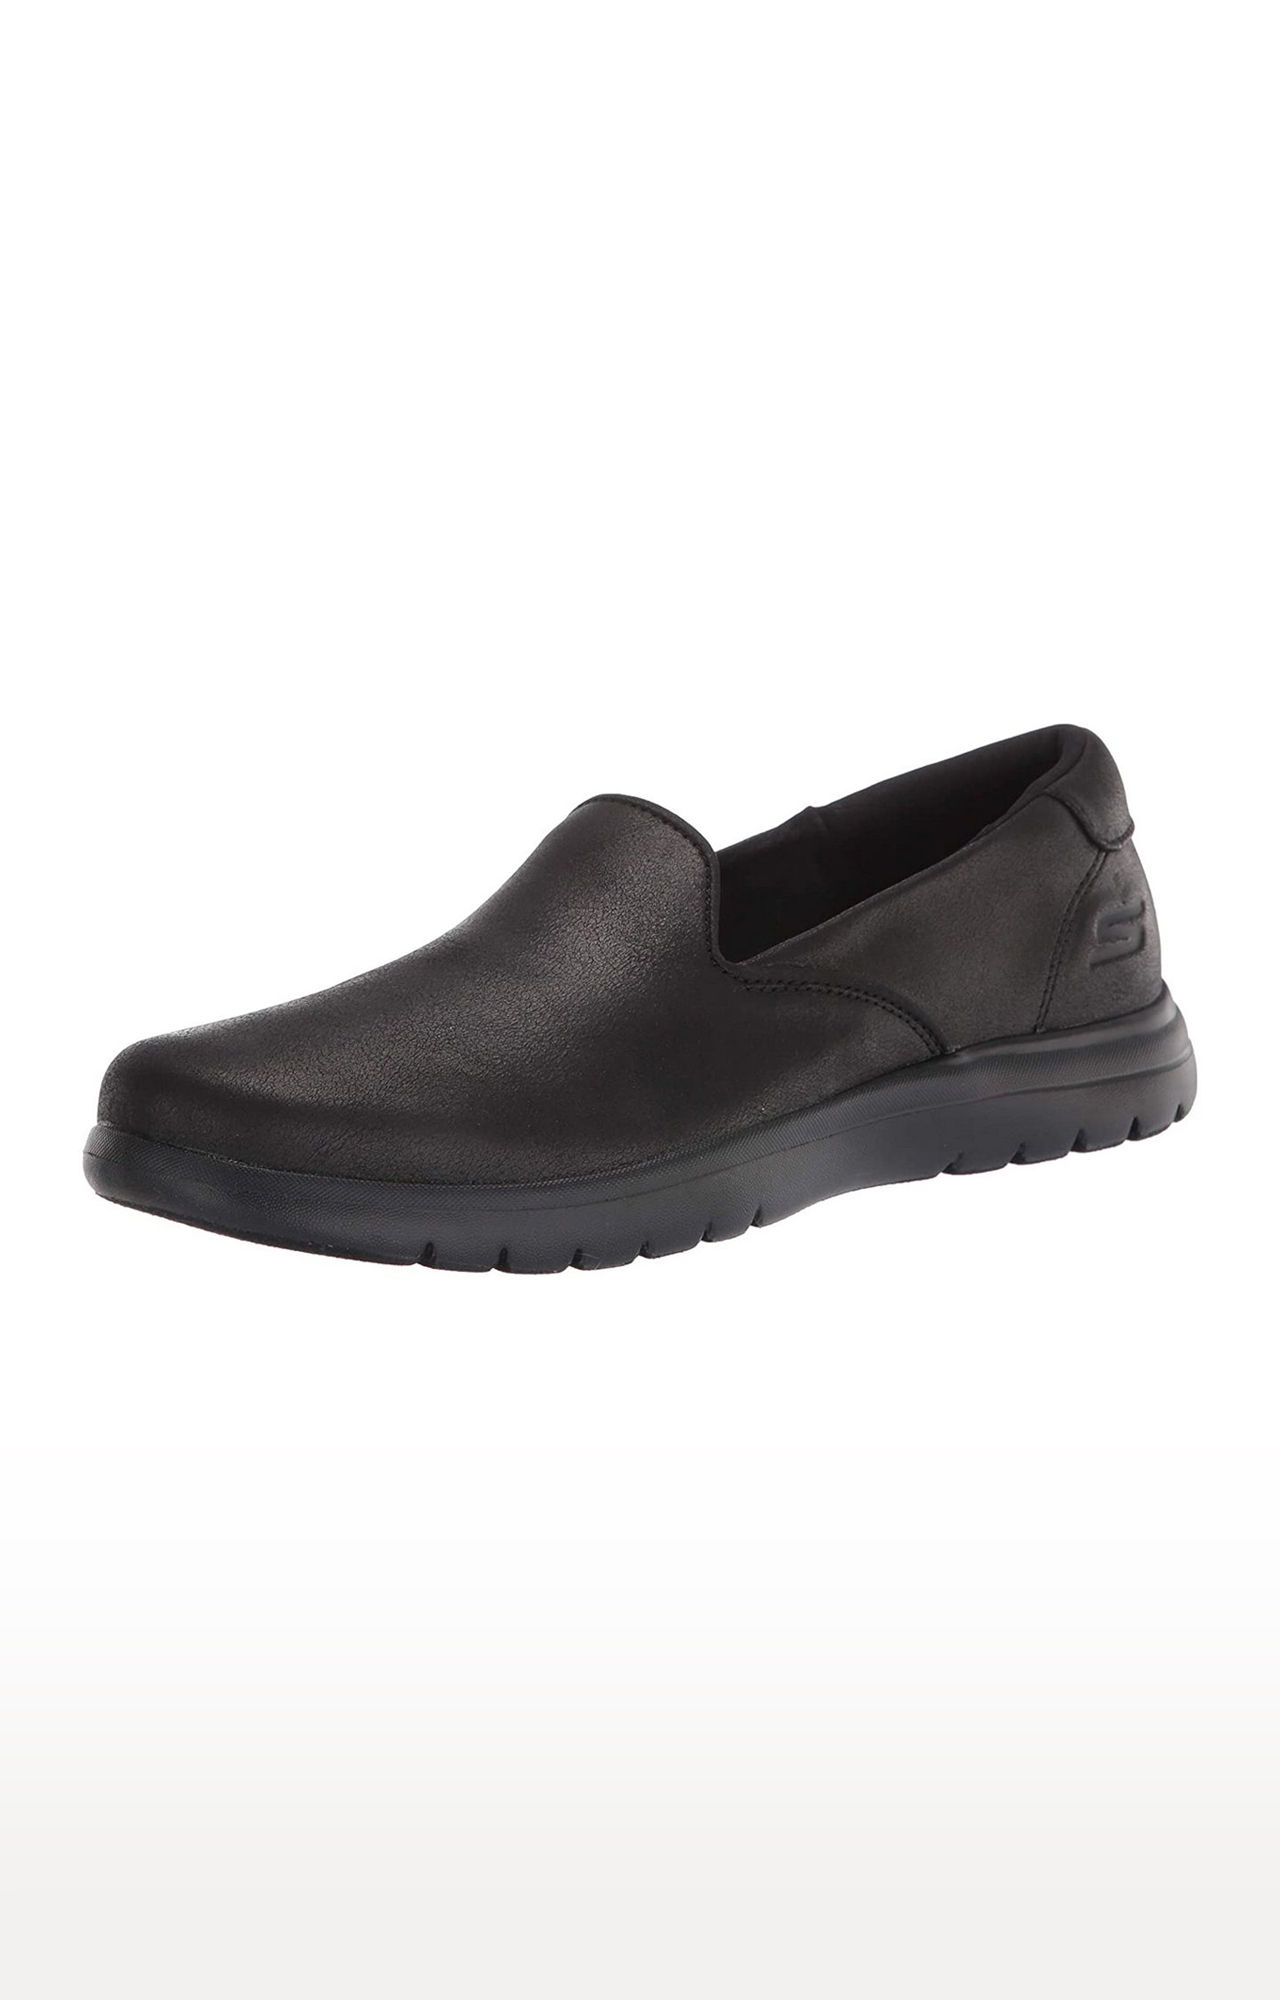 Skechers | Skechers womens ON-THE-GO FLEX LAVISH BLACK Walking Shoes - (136414-BBK) 0